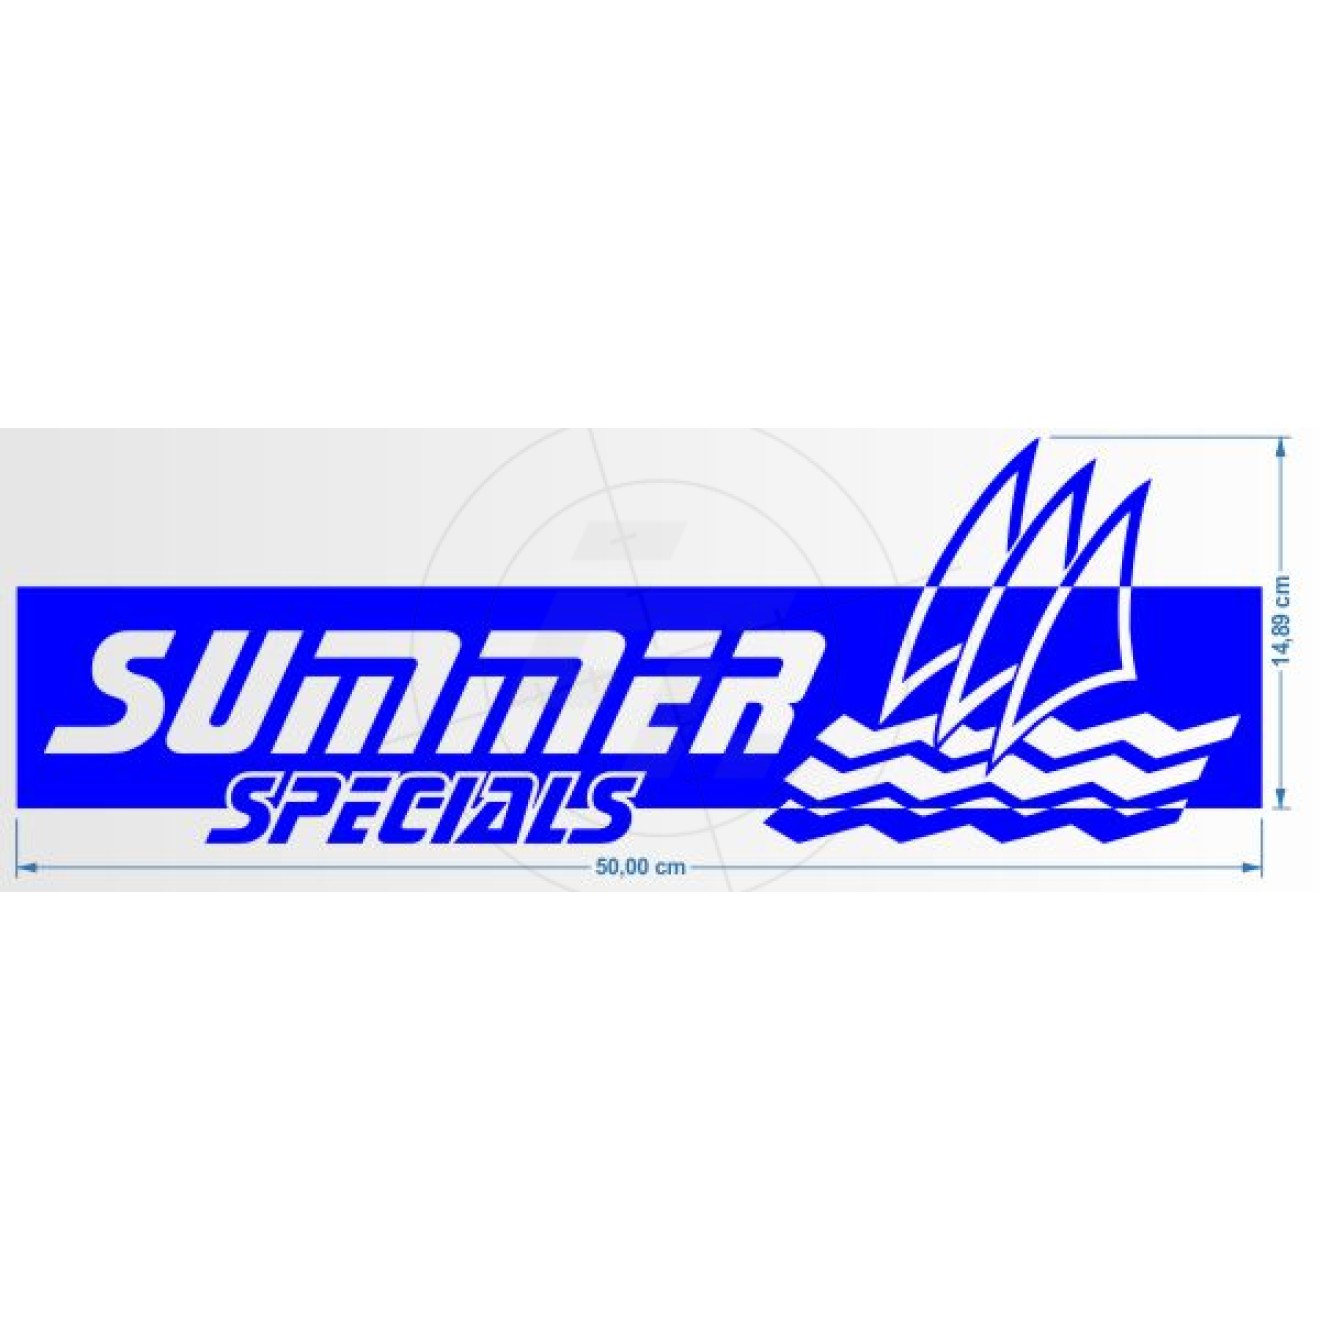 Sommerspecials, Banner Querformat